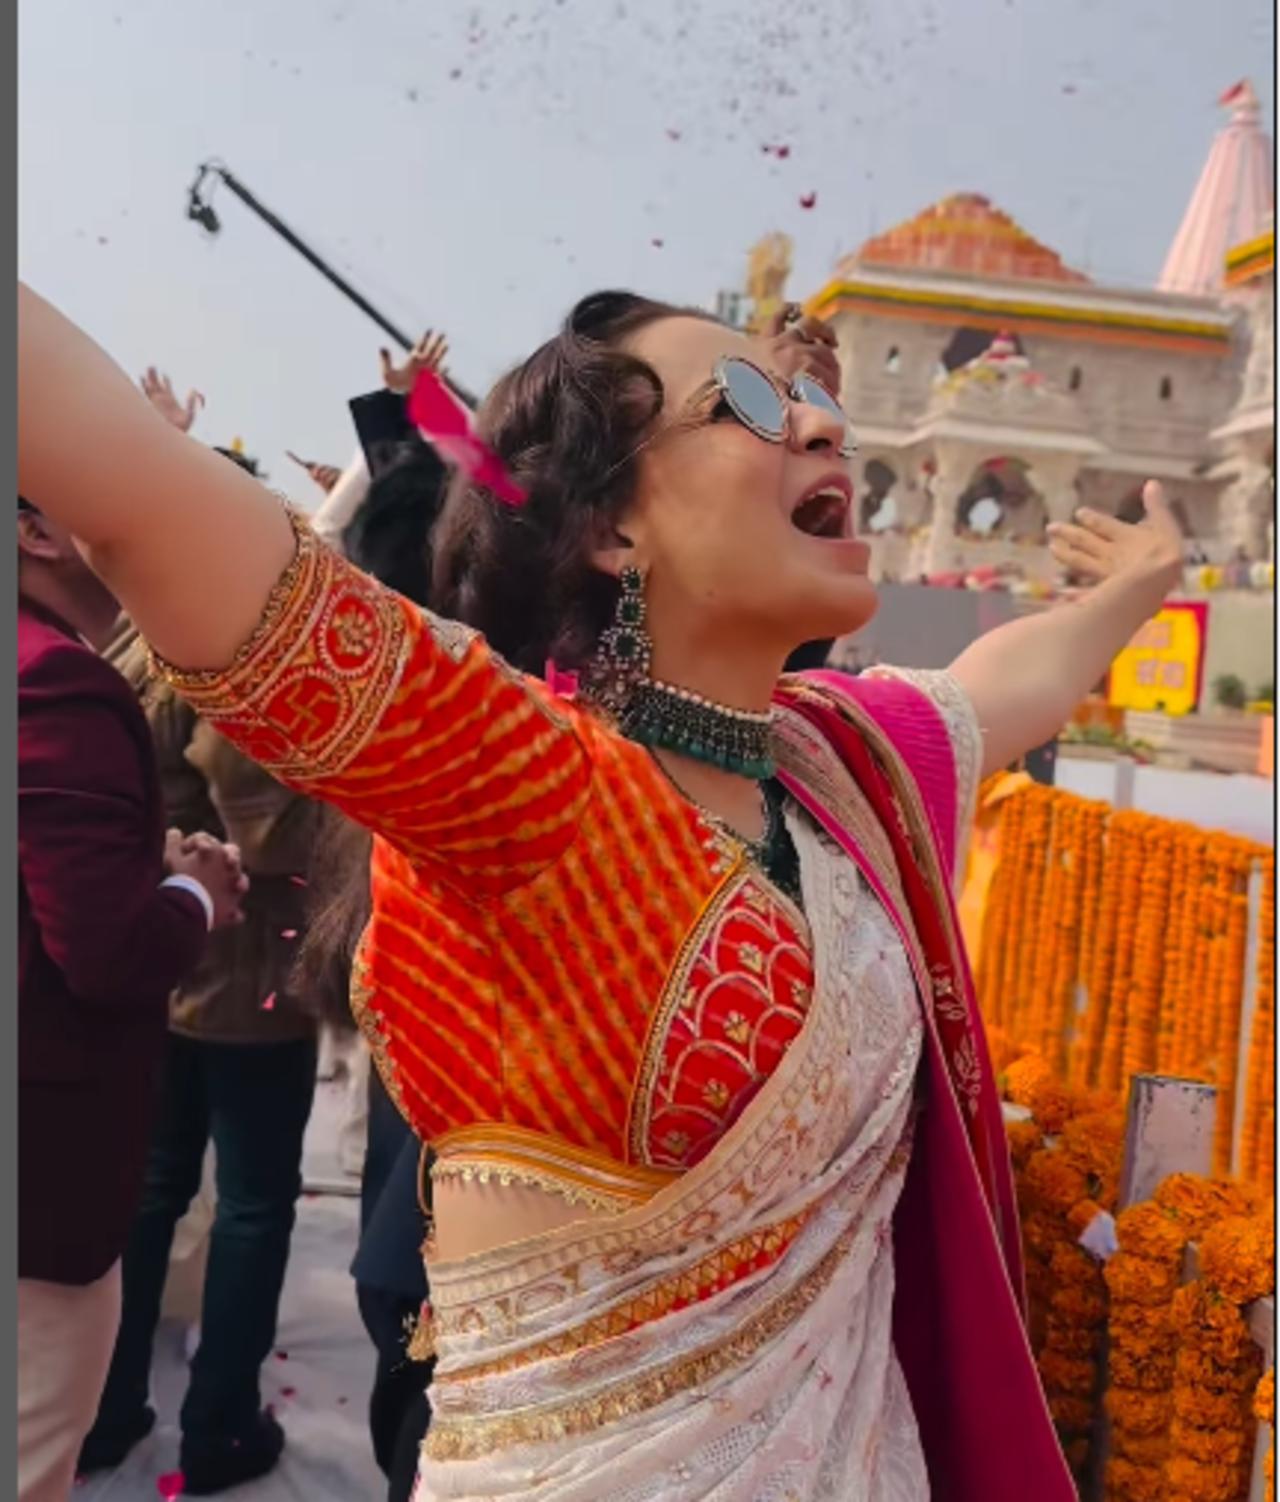 As the shubh mahurat for Pran Prathishtha arrived, the actress was seen loudly chanting 'Jai Shri Ram' in joy